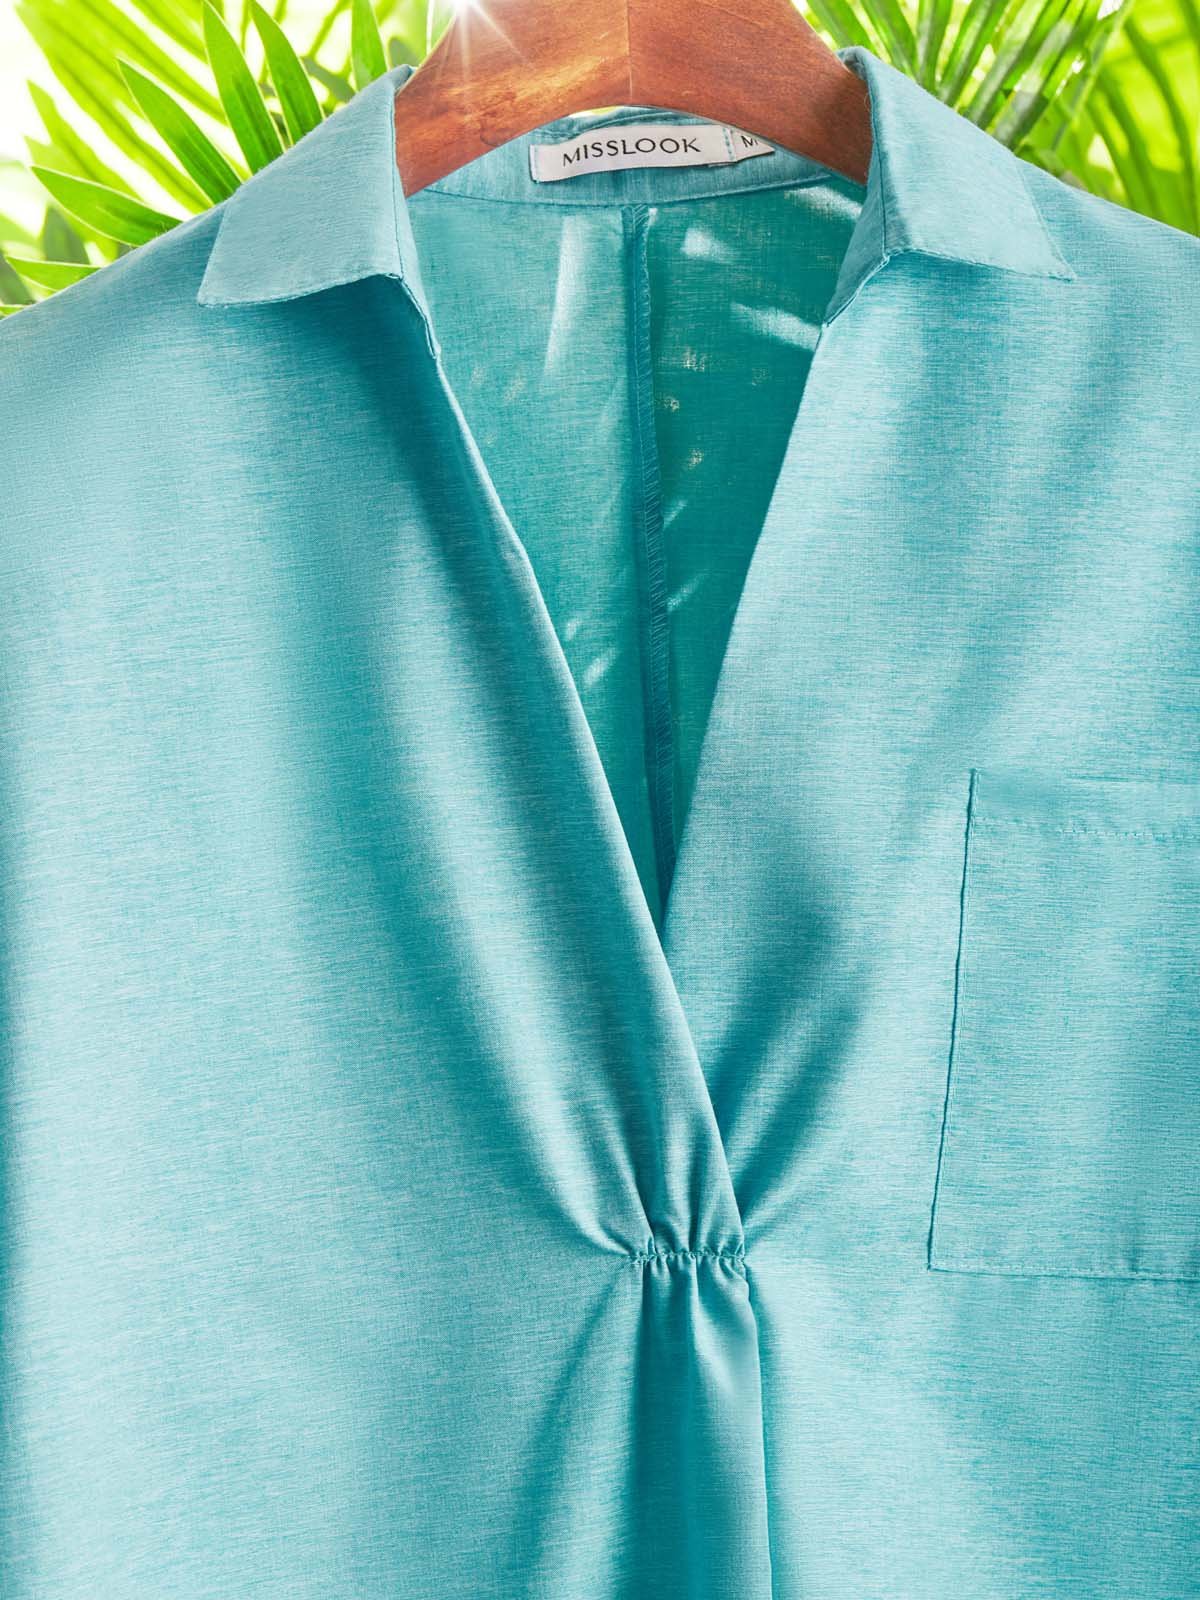 Women's Shirt Blouse Linen Cotton V Neck Casual Plain Pockets Long Sleeve Blouse